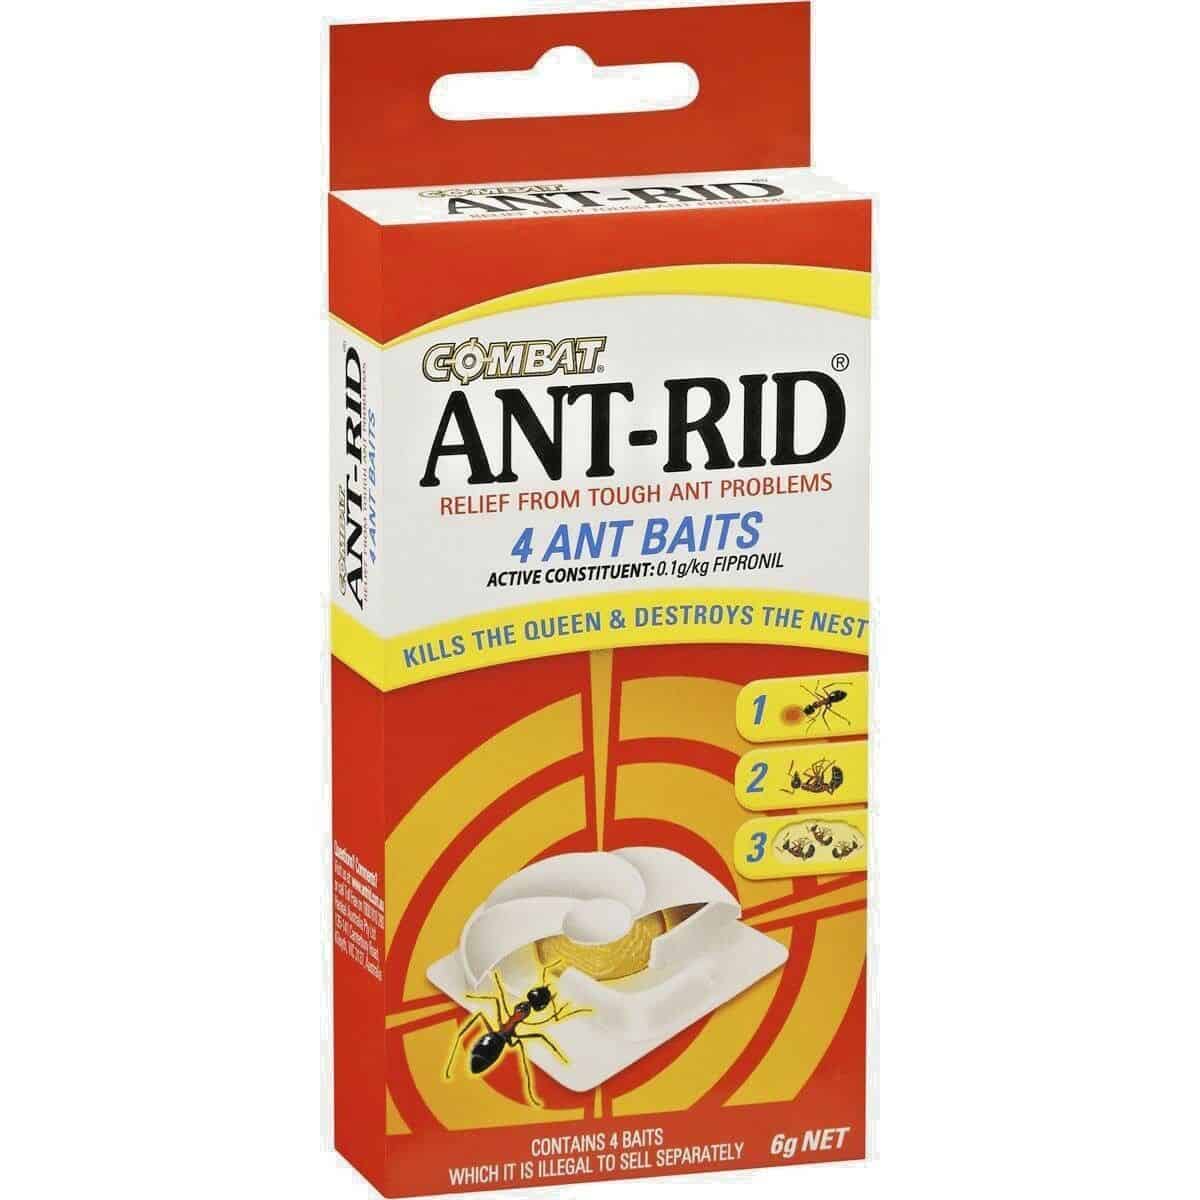 Combat ANT RID 4 Ant Baits Ant Killer